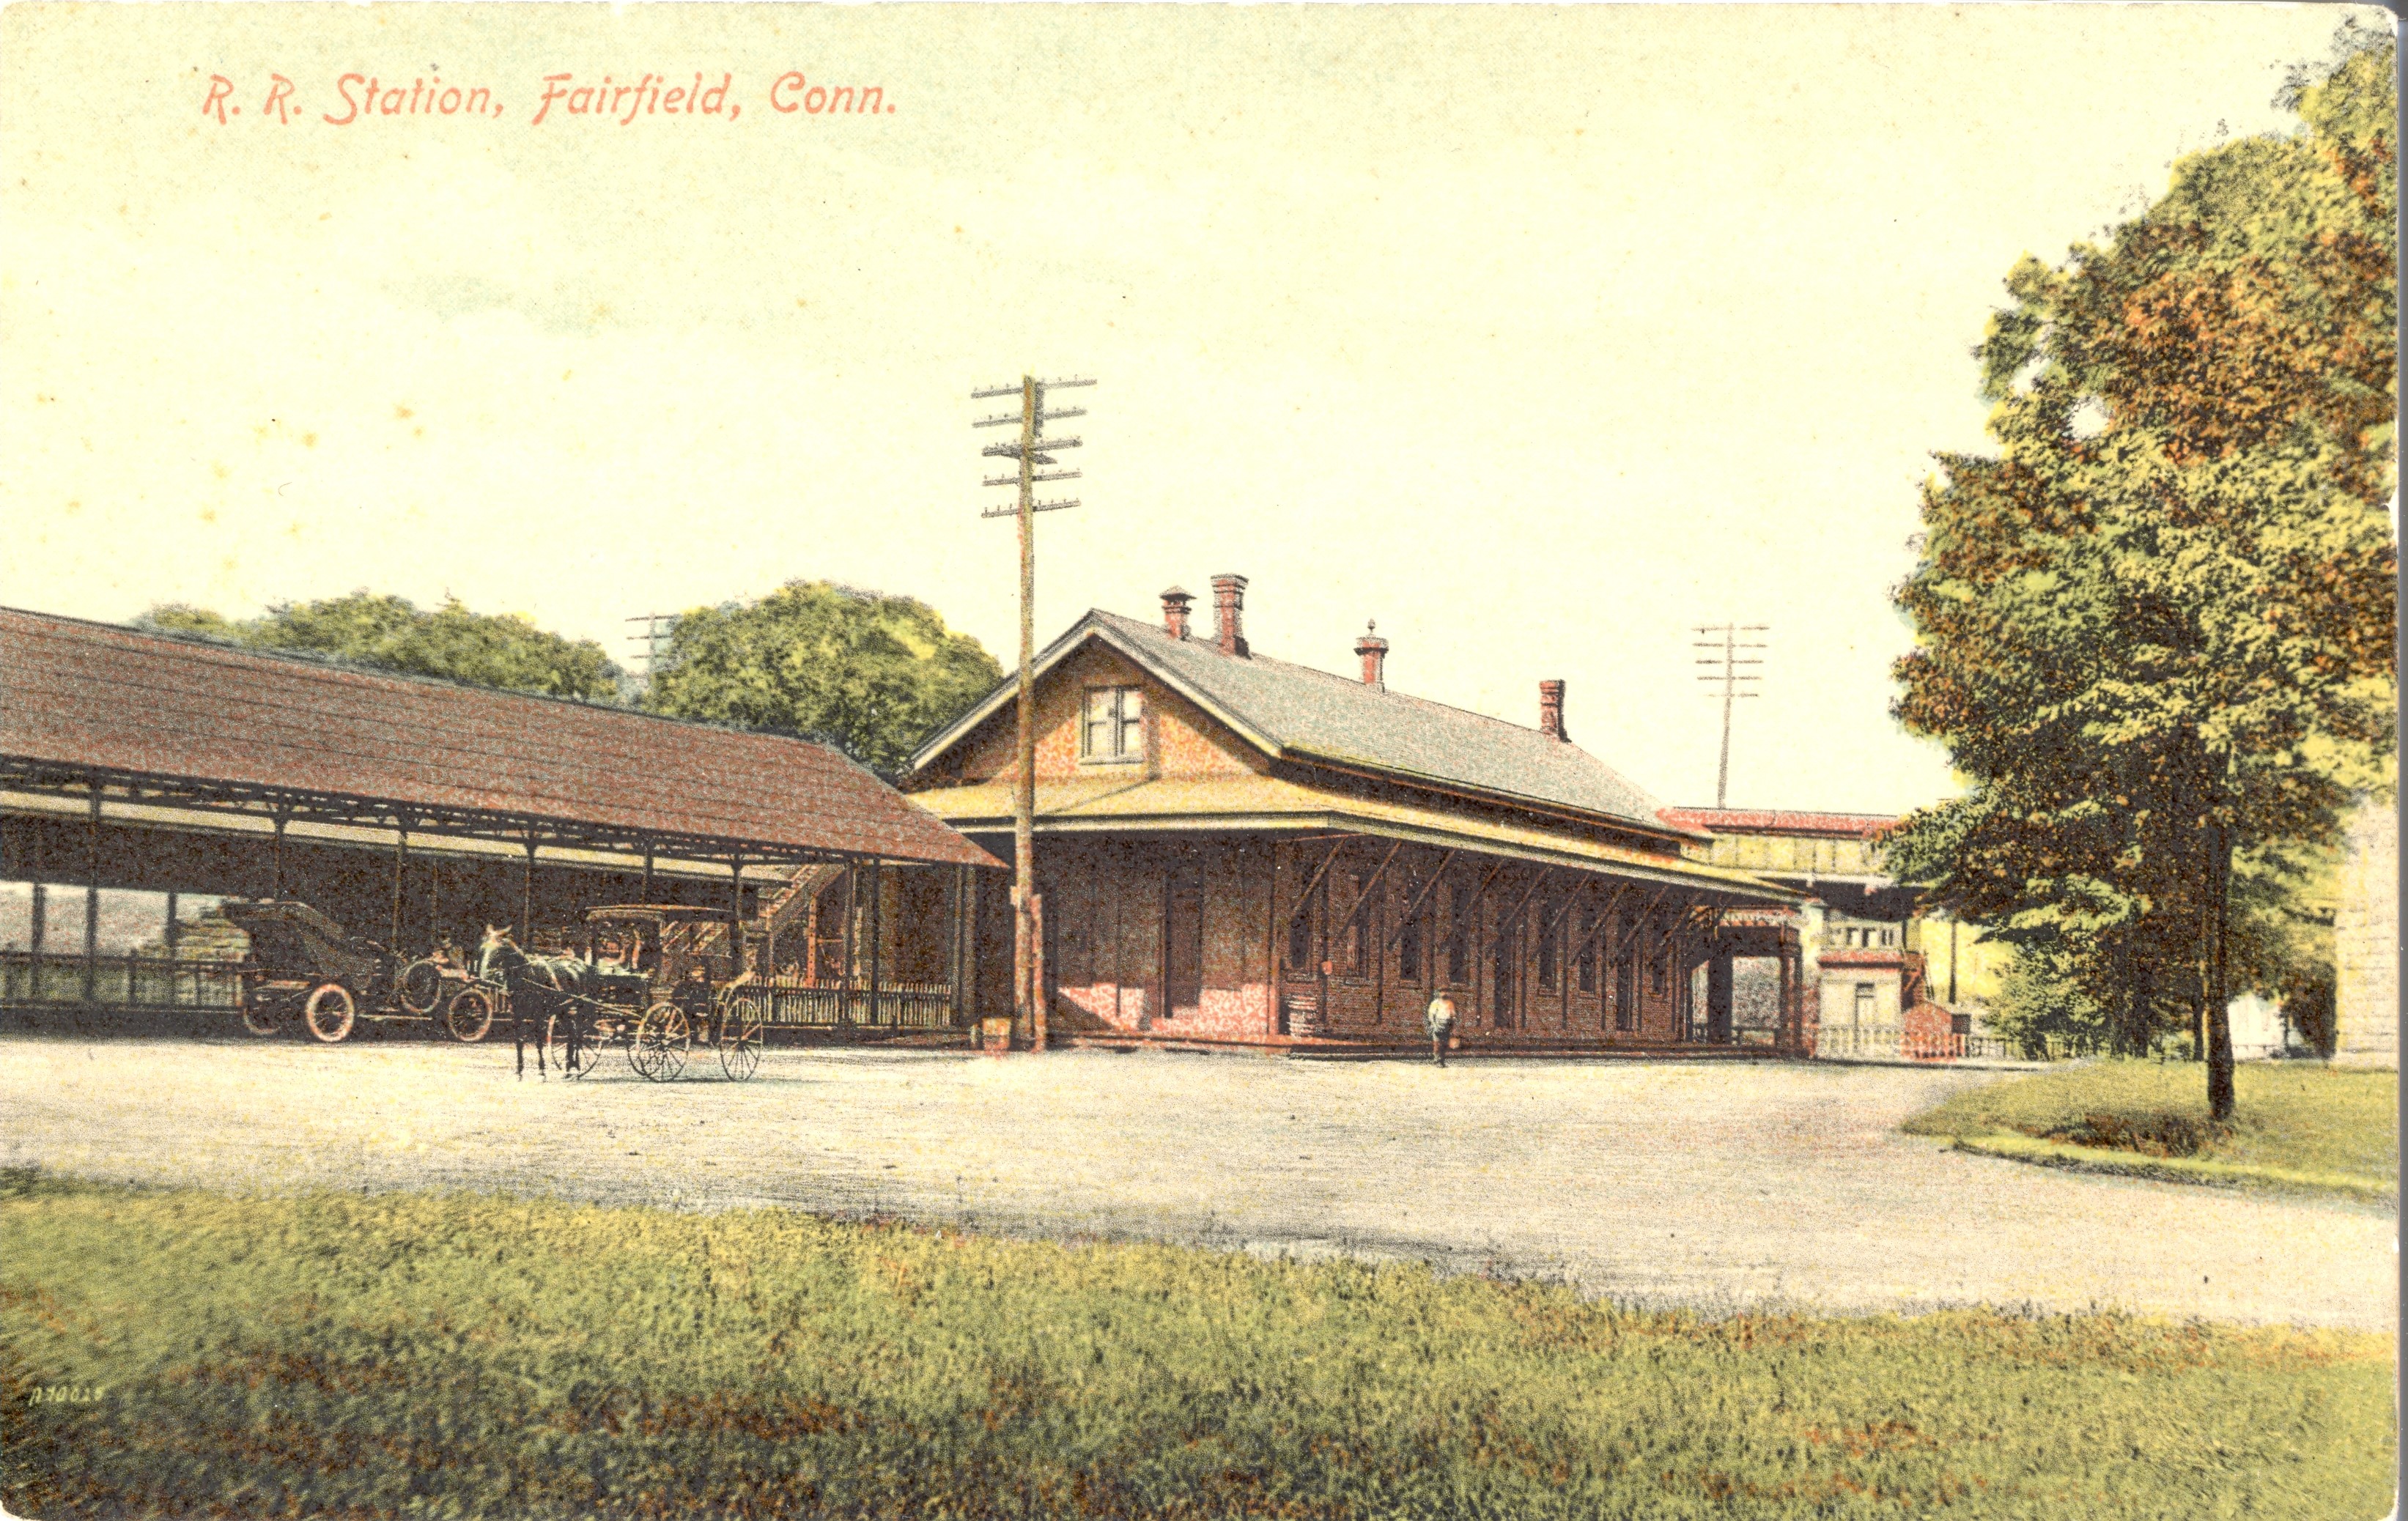 Fairfield Train Station Historical